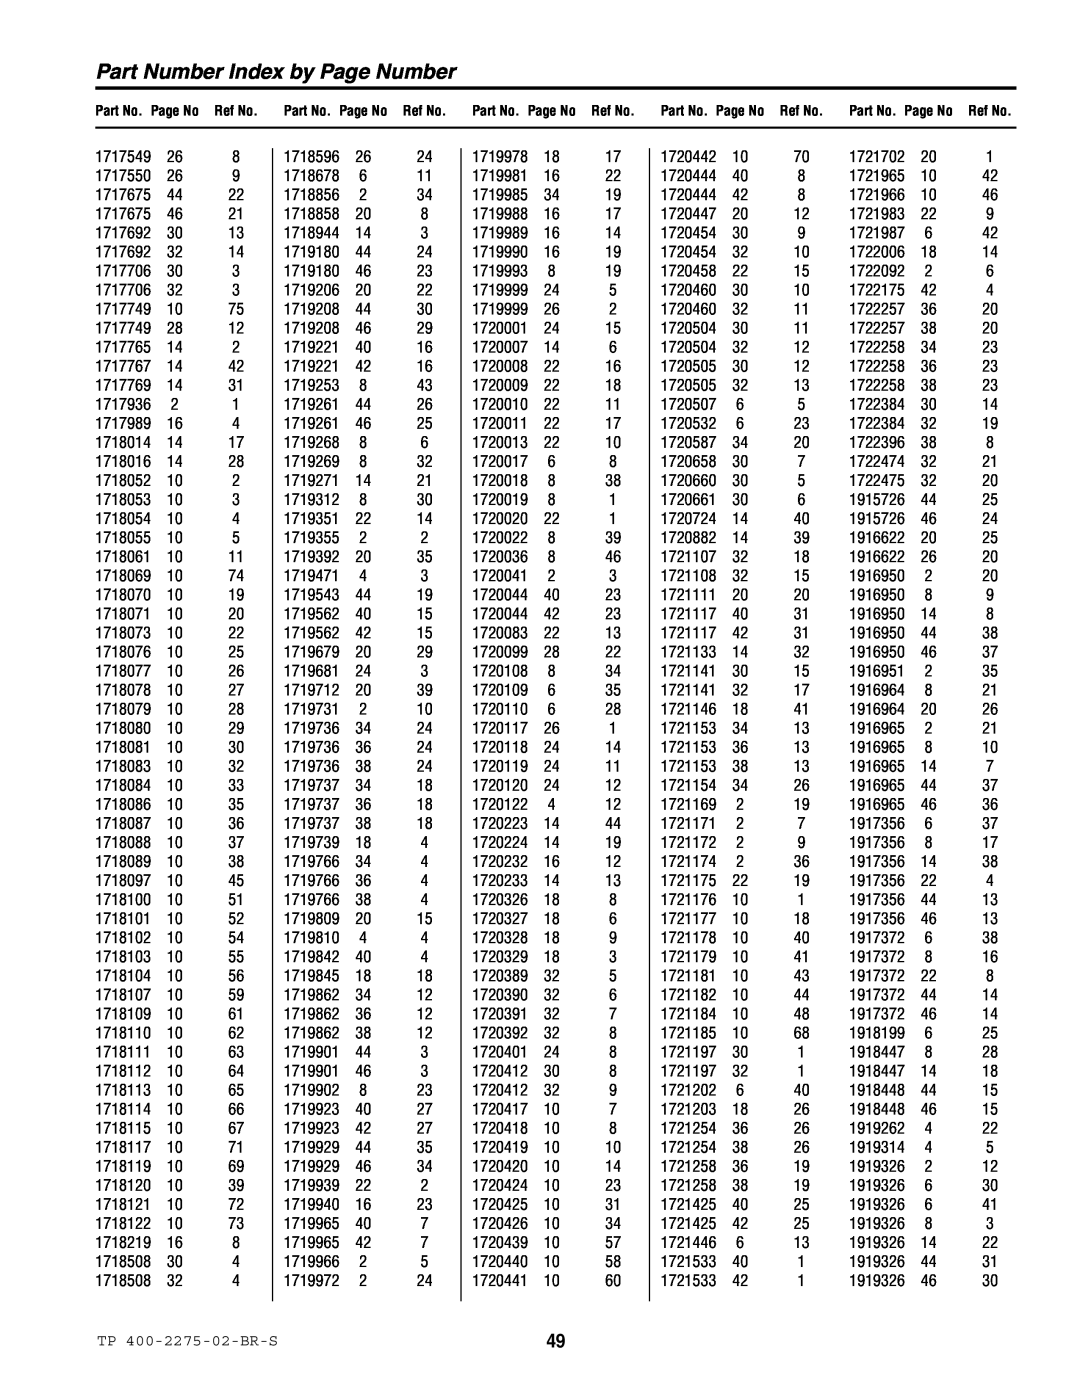 Massey Ferguson L&G 1693583 manual Part Number Index by Page Number, TP 400-2275-02-BR-S 